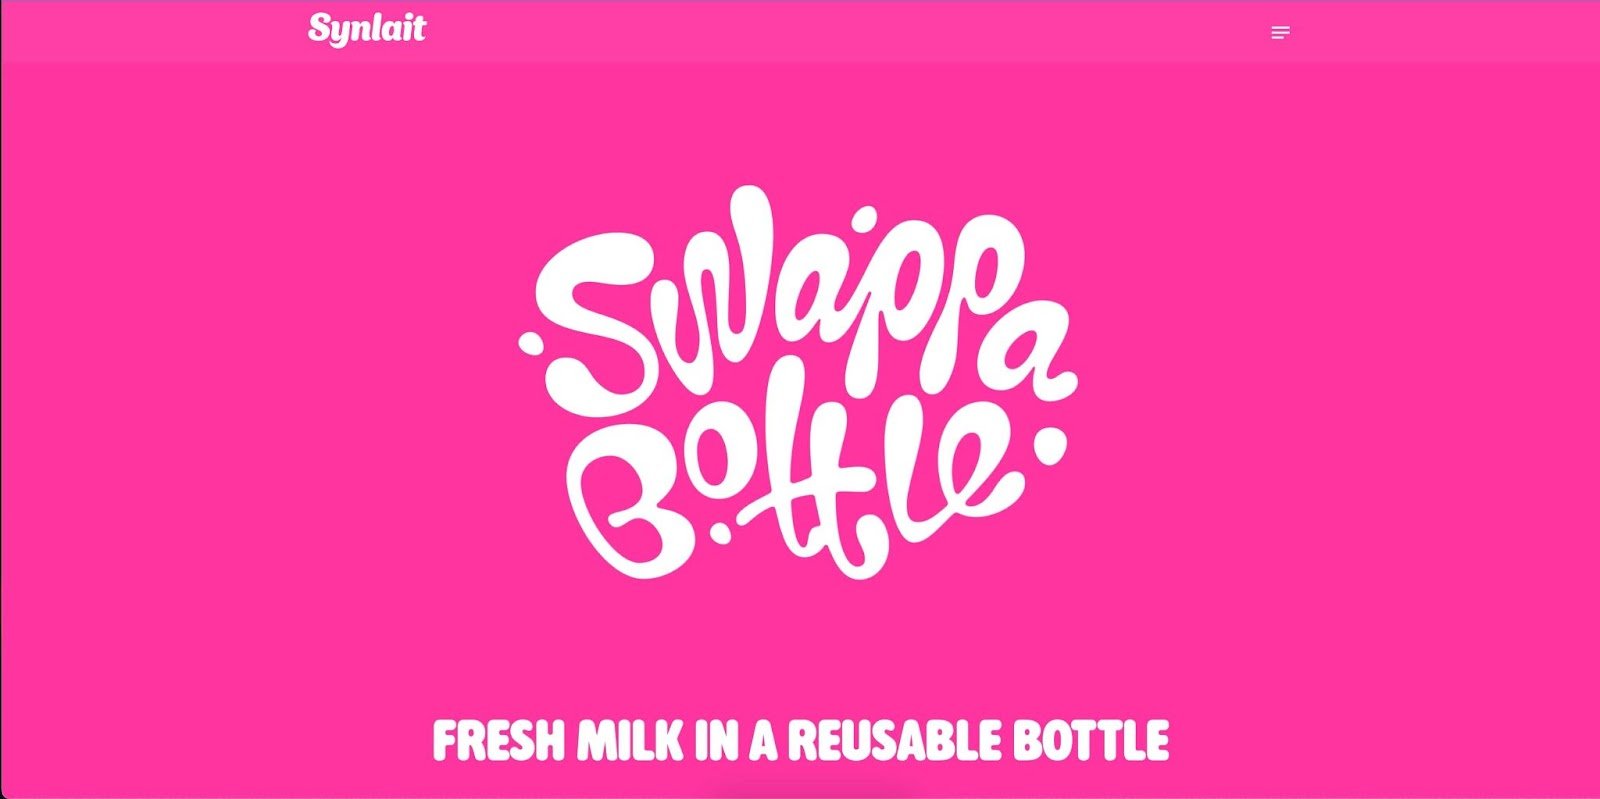 swappa bottle homepage